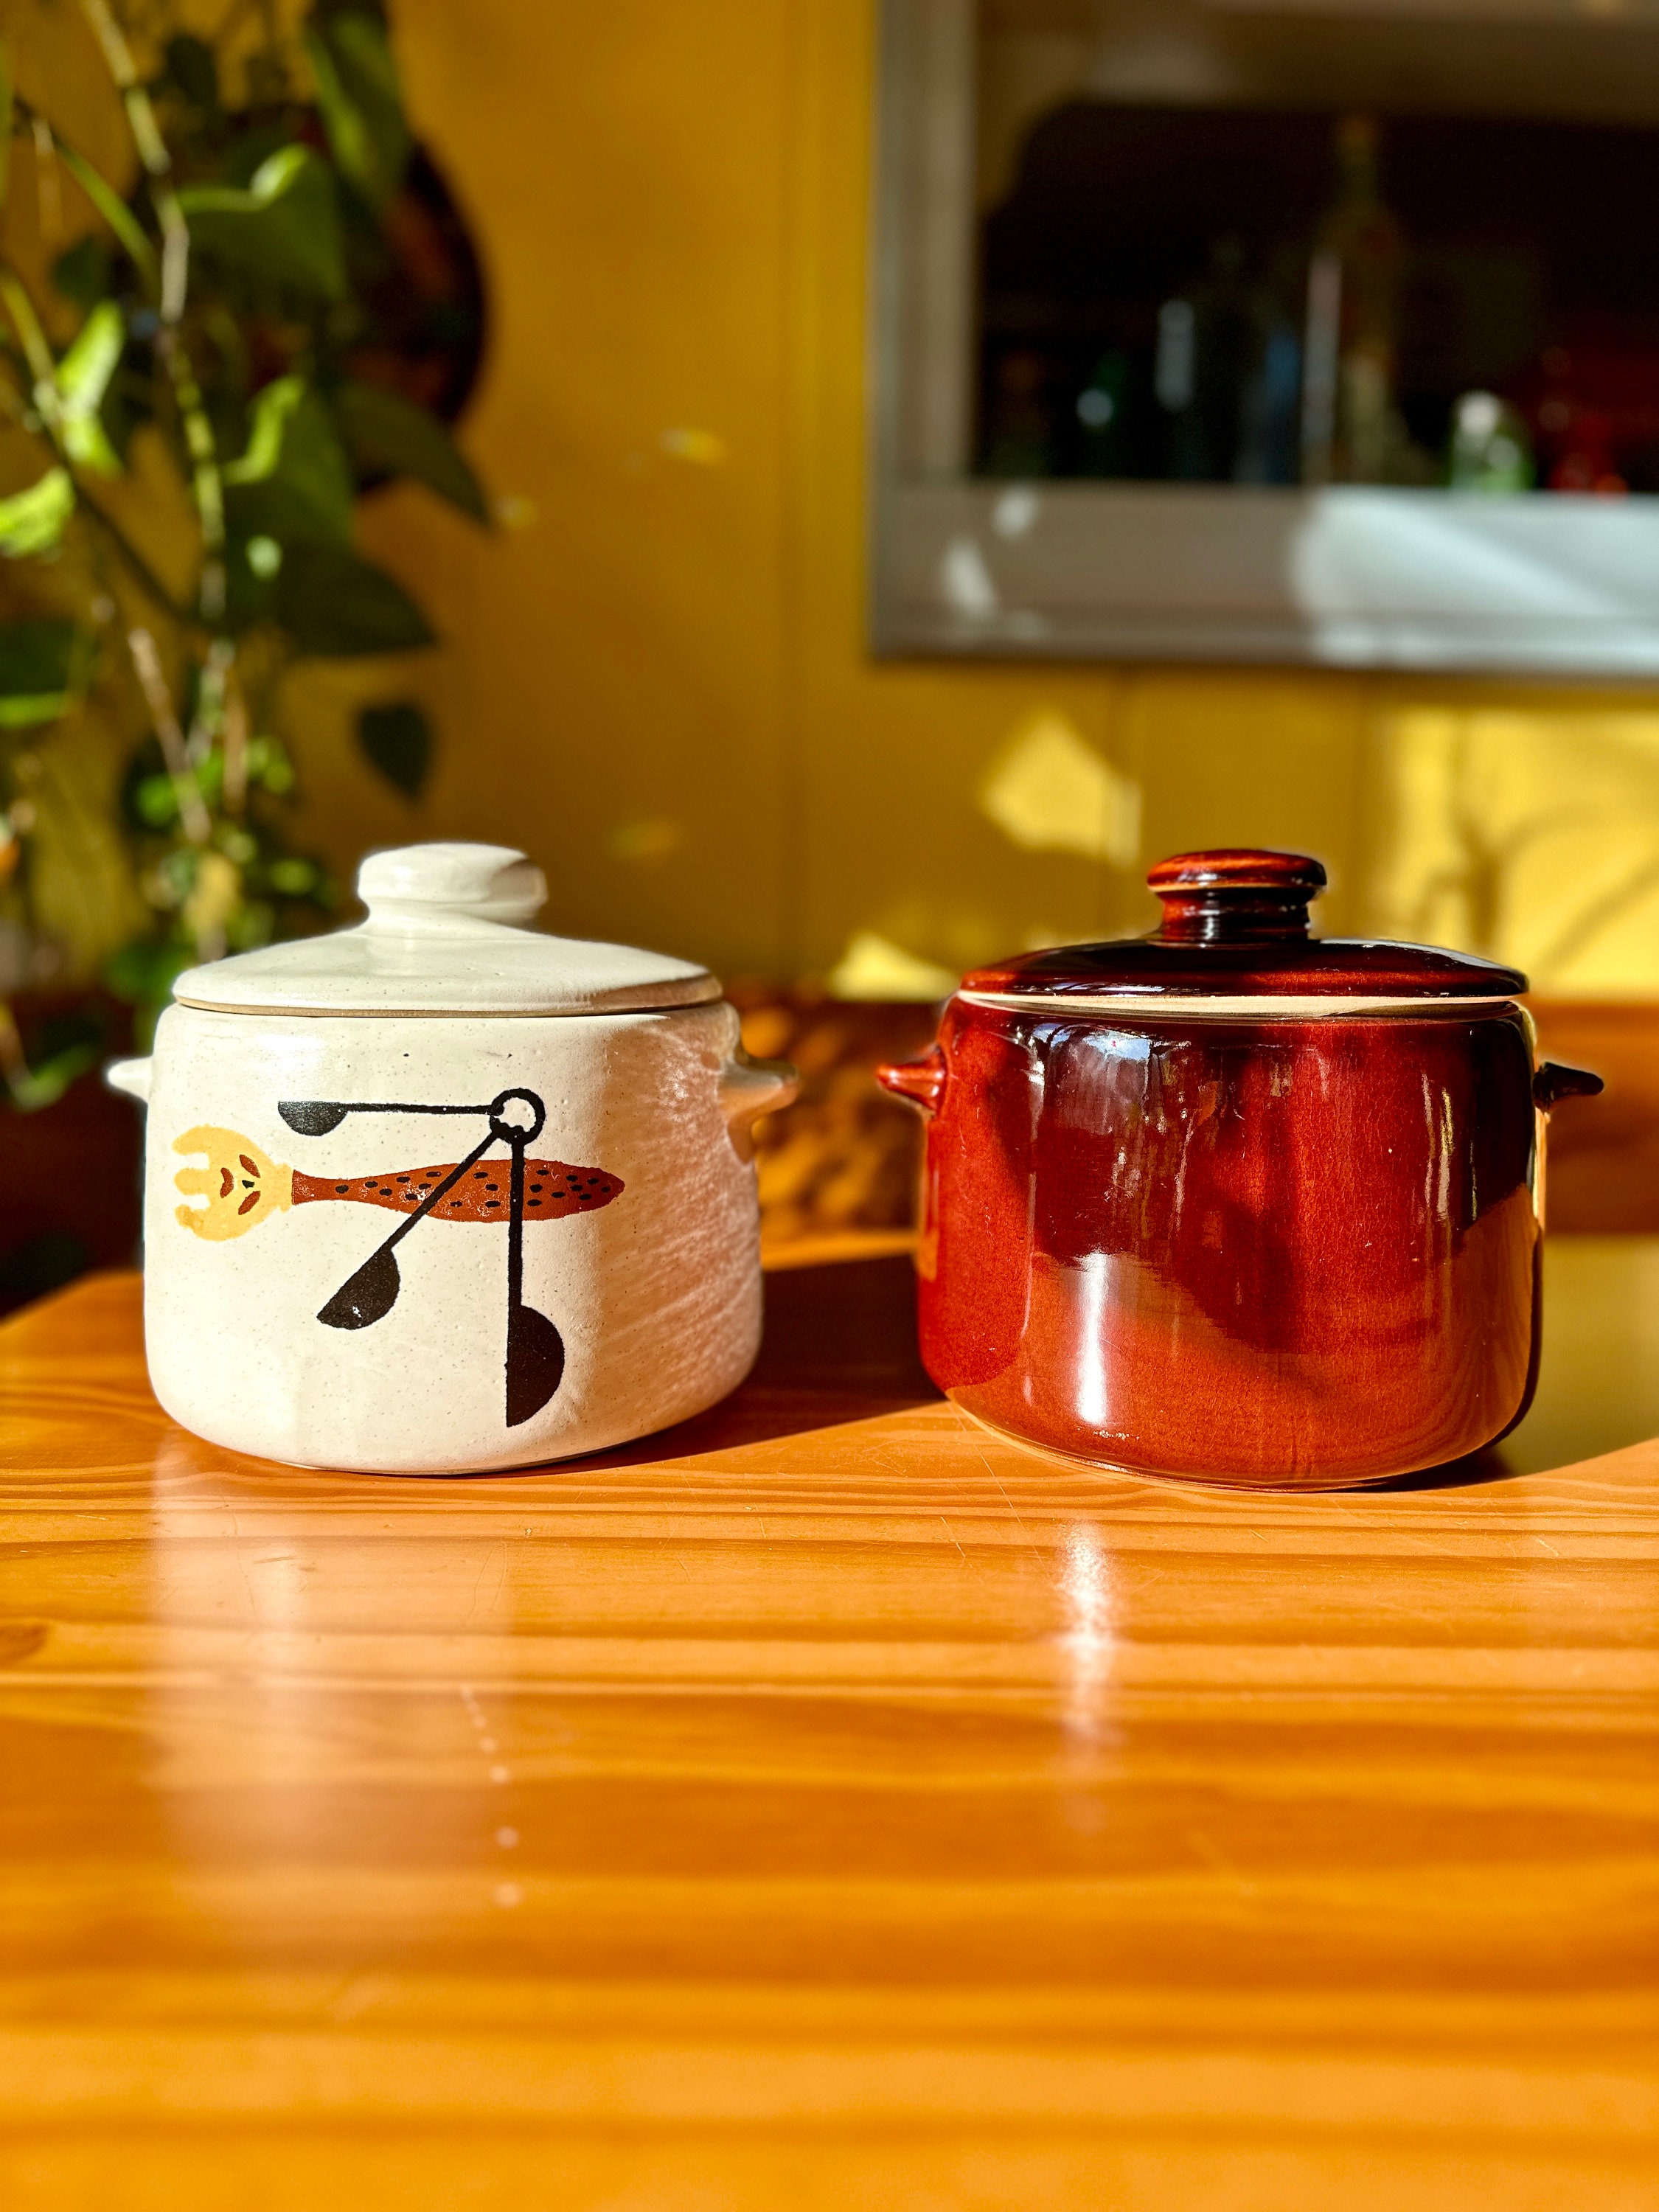 Vintage West Bend 4 qt Slow Cooker Crock Pot in Box No 84194